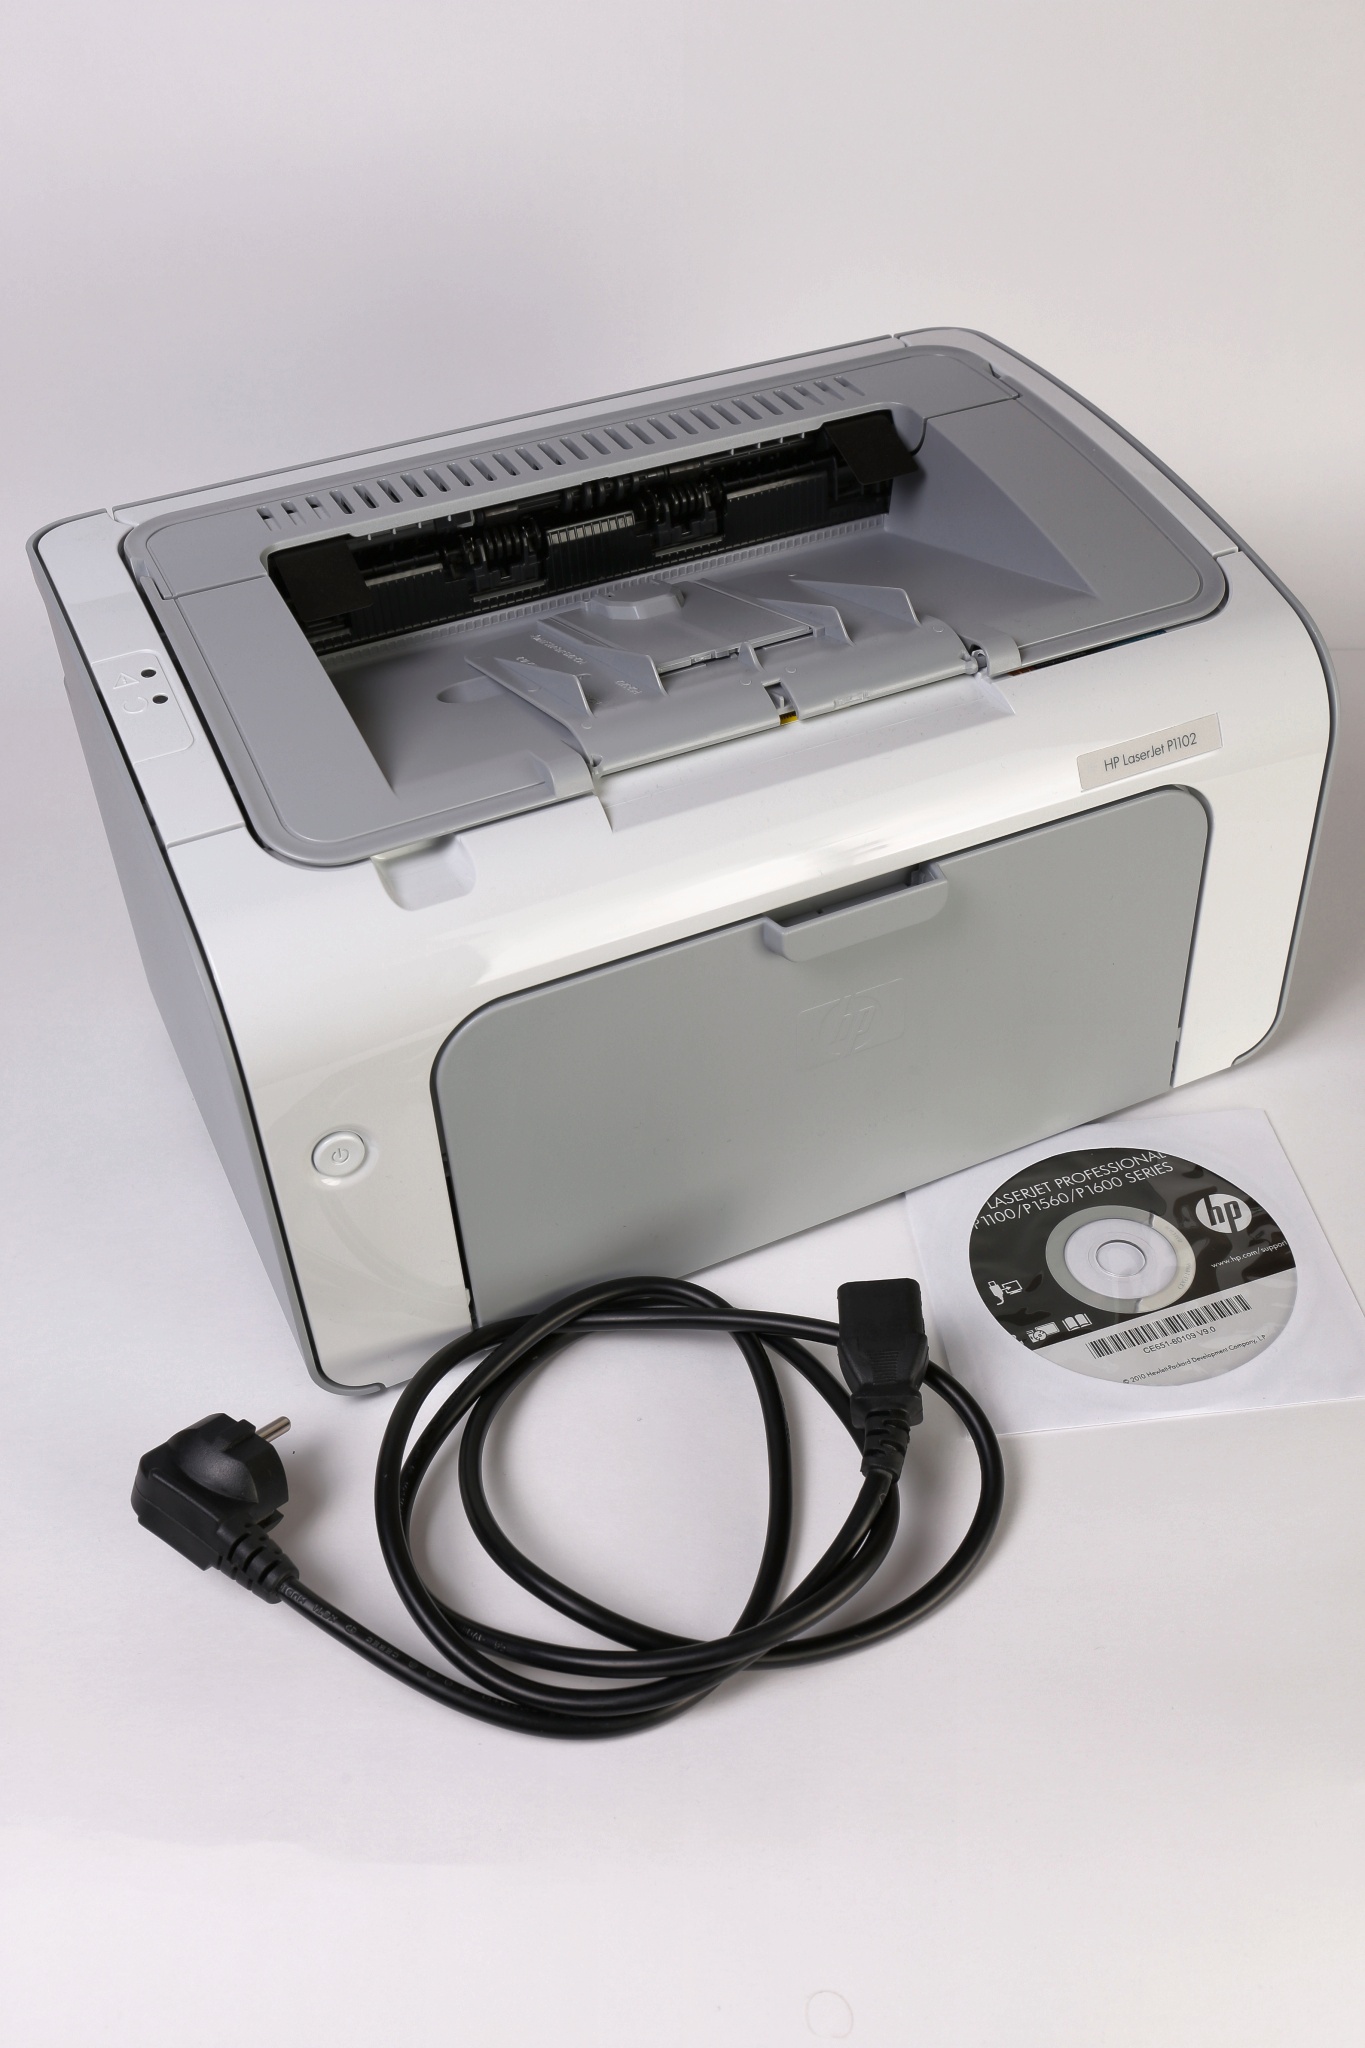 Купить принтер laserjet p1102. Принтер НР LASERJET Pro p1102.